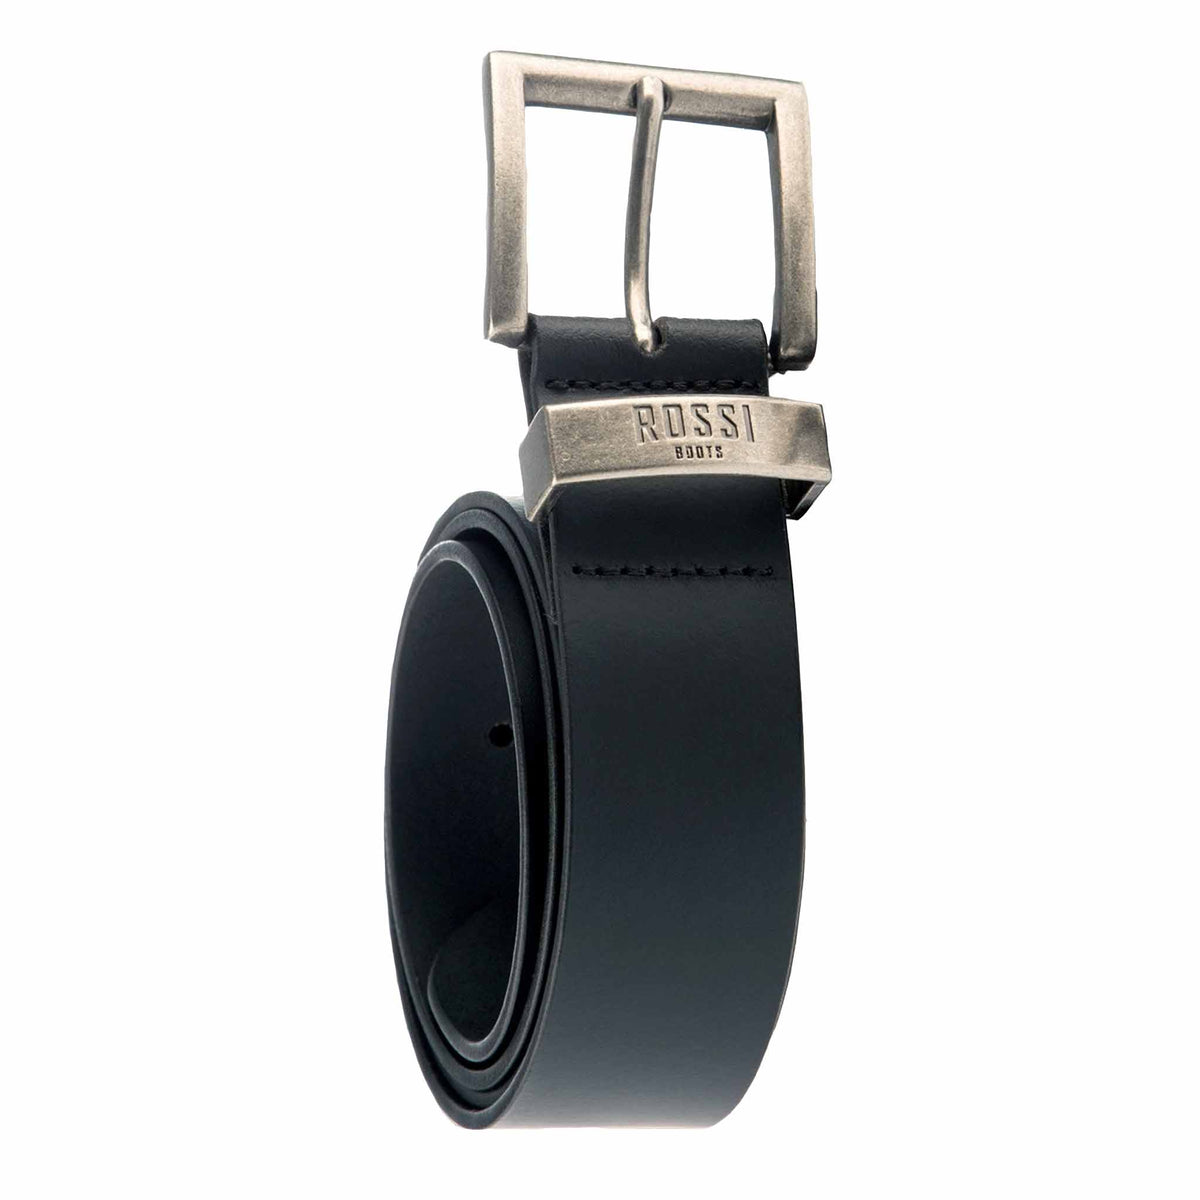 rossi leather belt in black